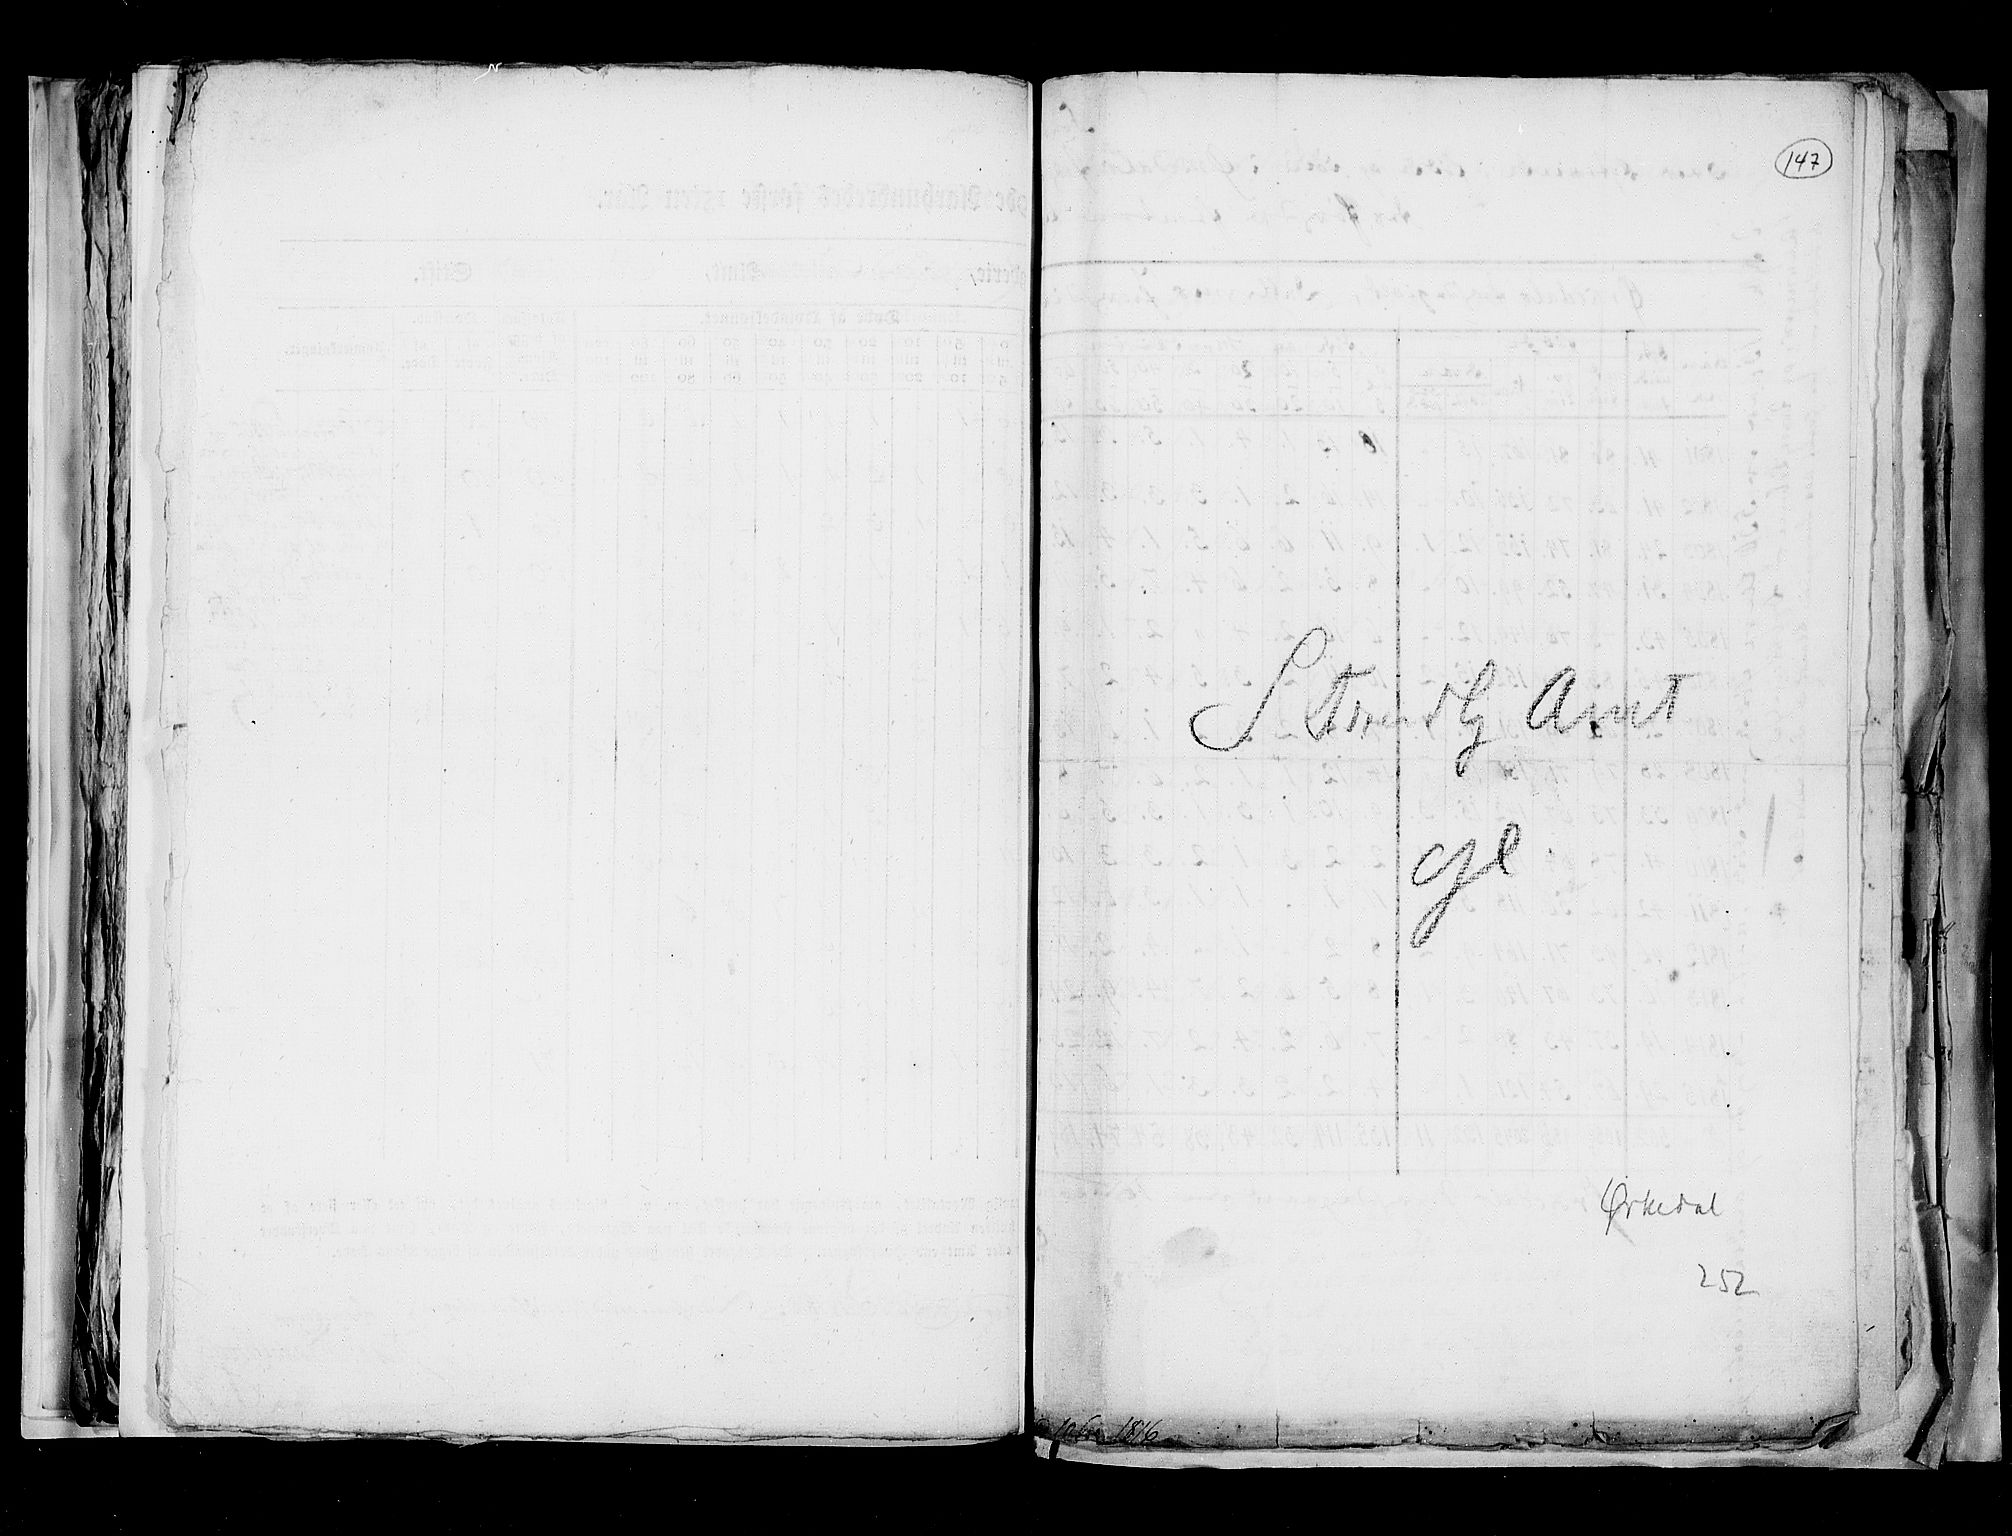 RA, Folketellingen 1815, bind 7: Folkemengdens bevegelse i Bergen stift og Trondheim stift, 1815, s. 147